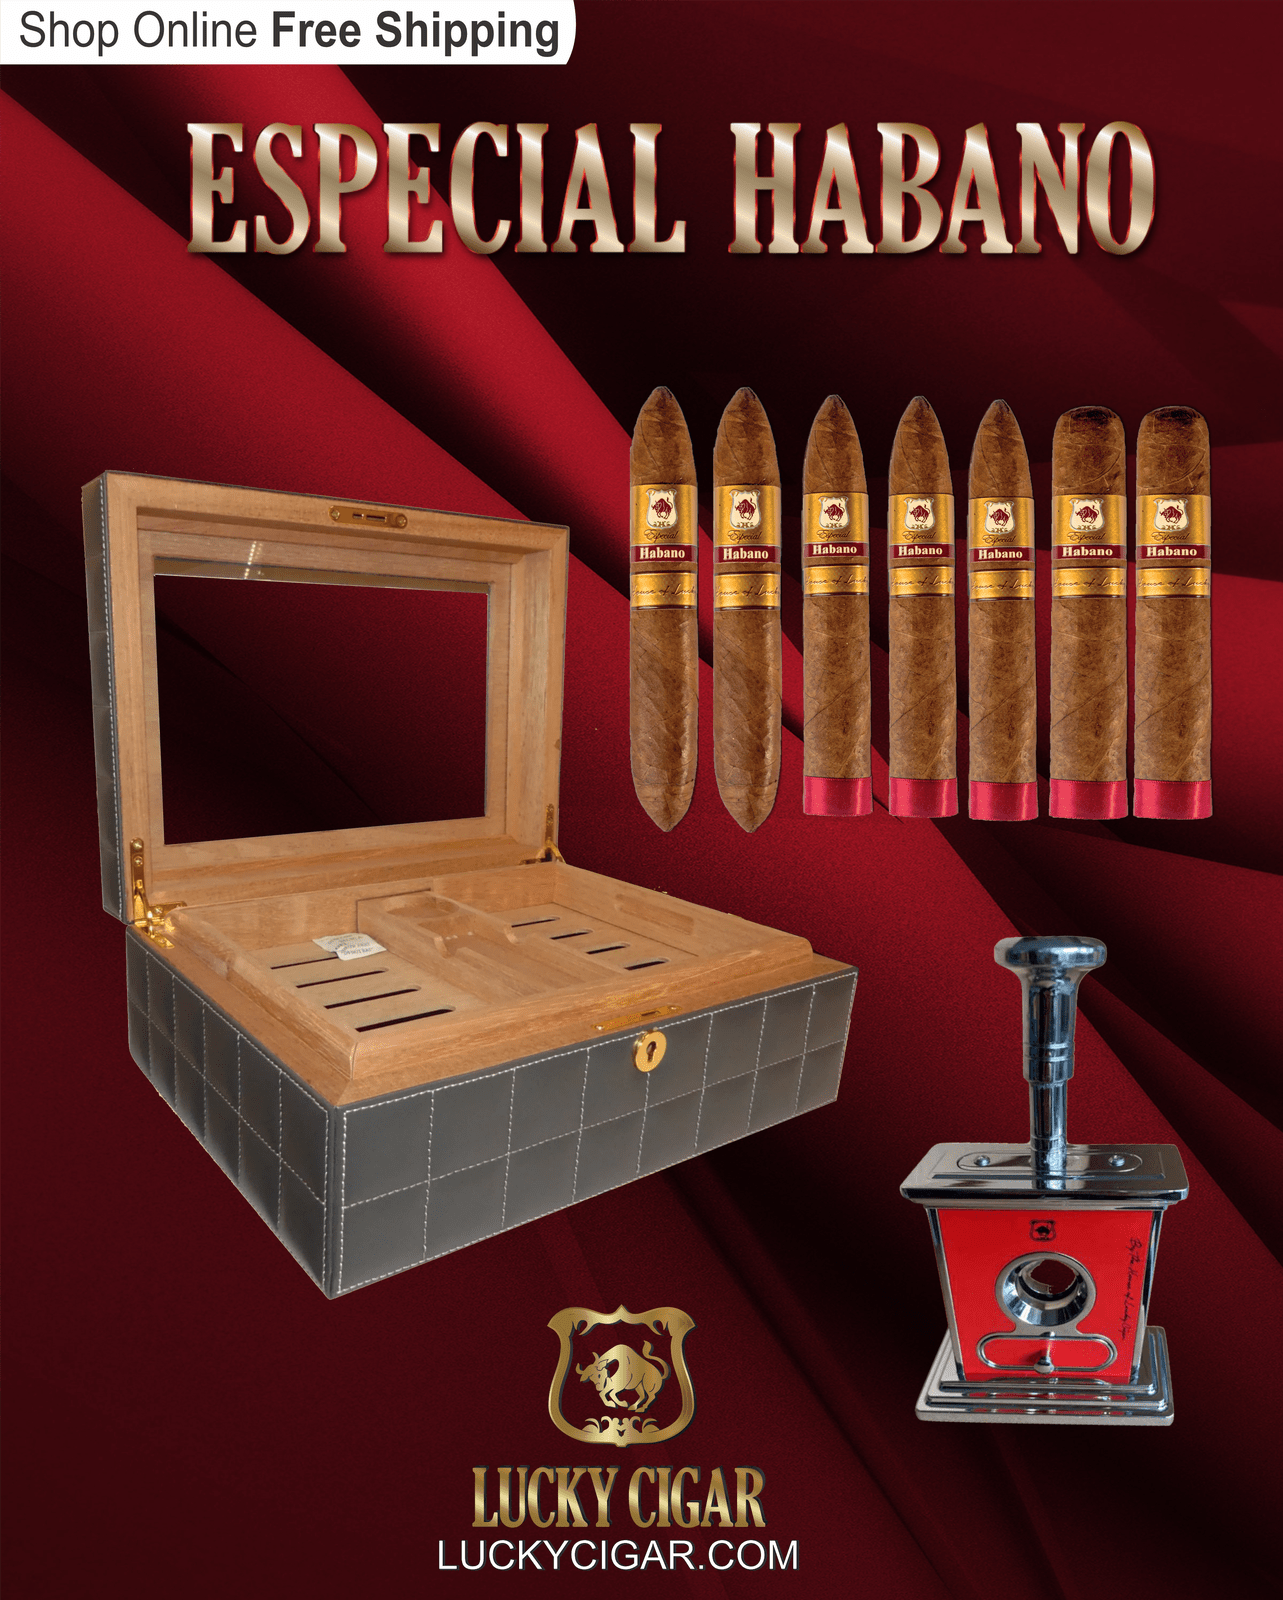 Habano Cigars: Especial Habano by Lucky Cigar: Set of 6 Cigars 2 Toro, 3 Torpedo, 2 Perfecto with Torch, Humidor